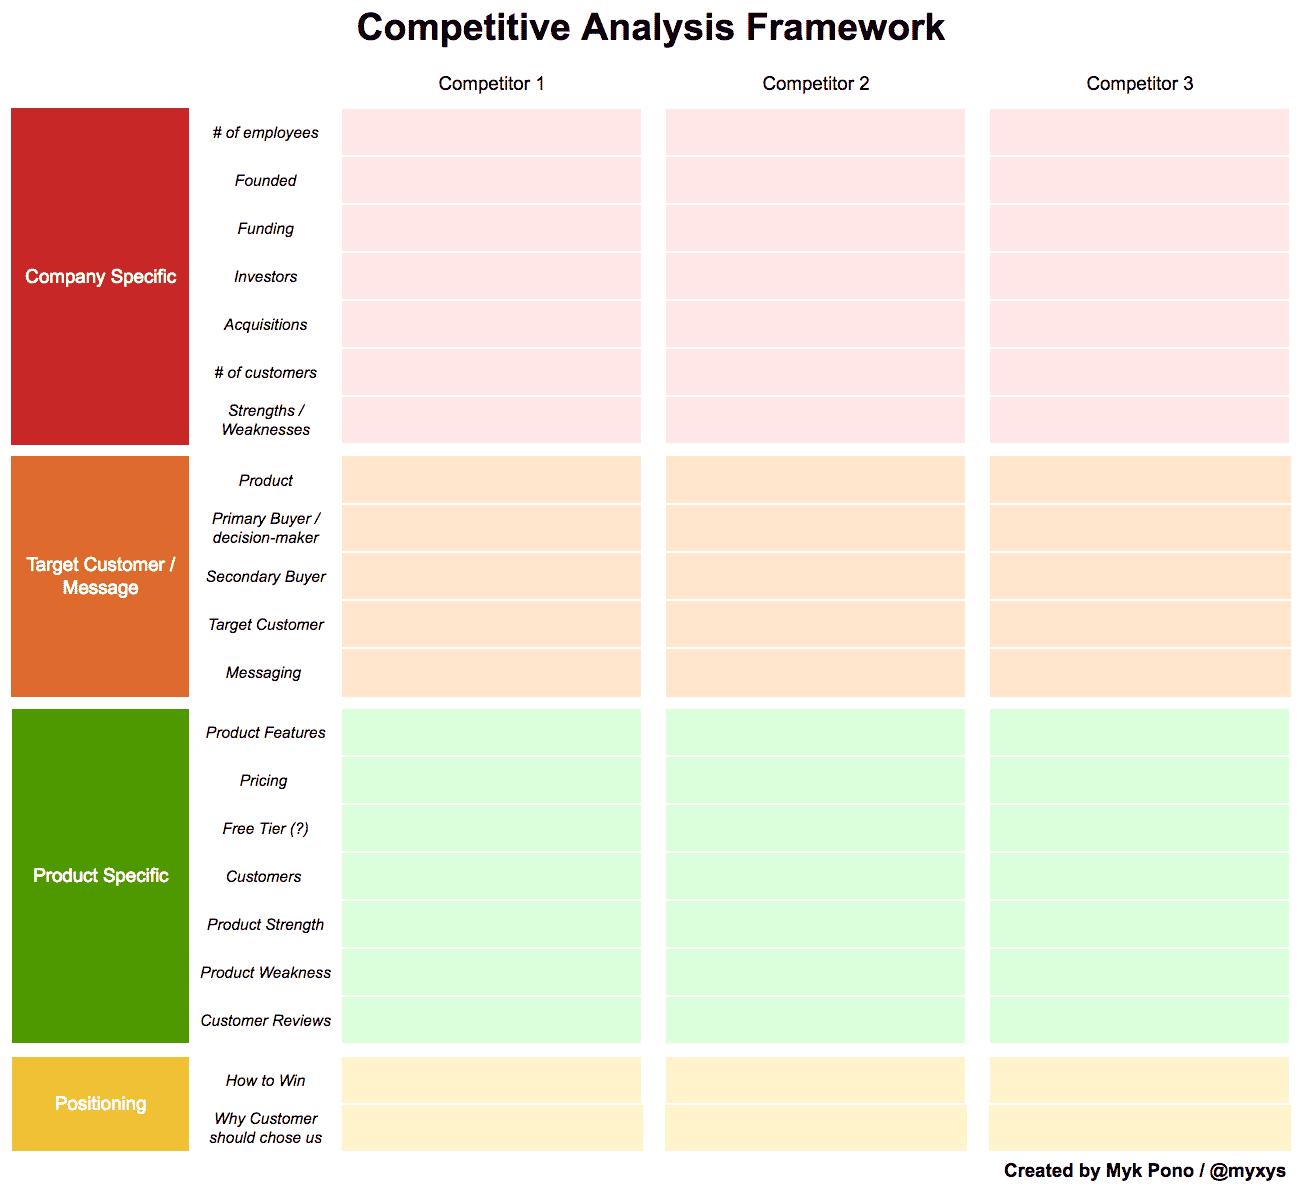 Competitive analysis framework.